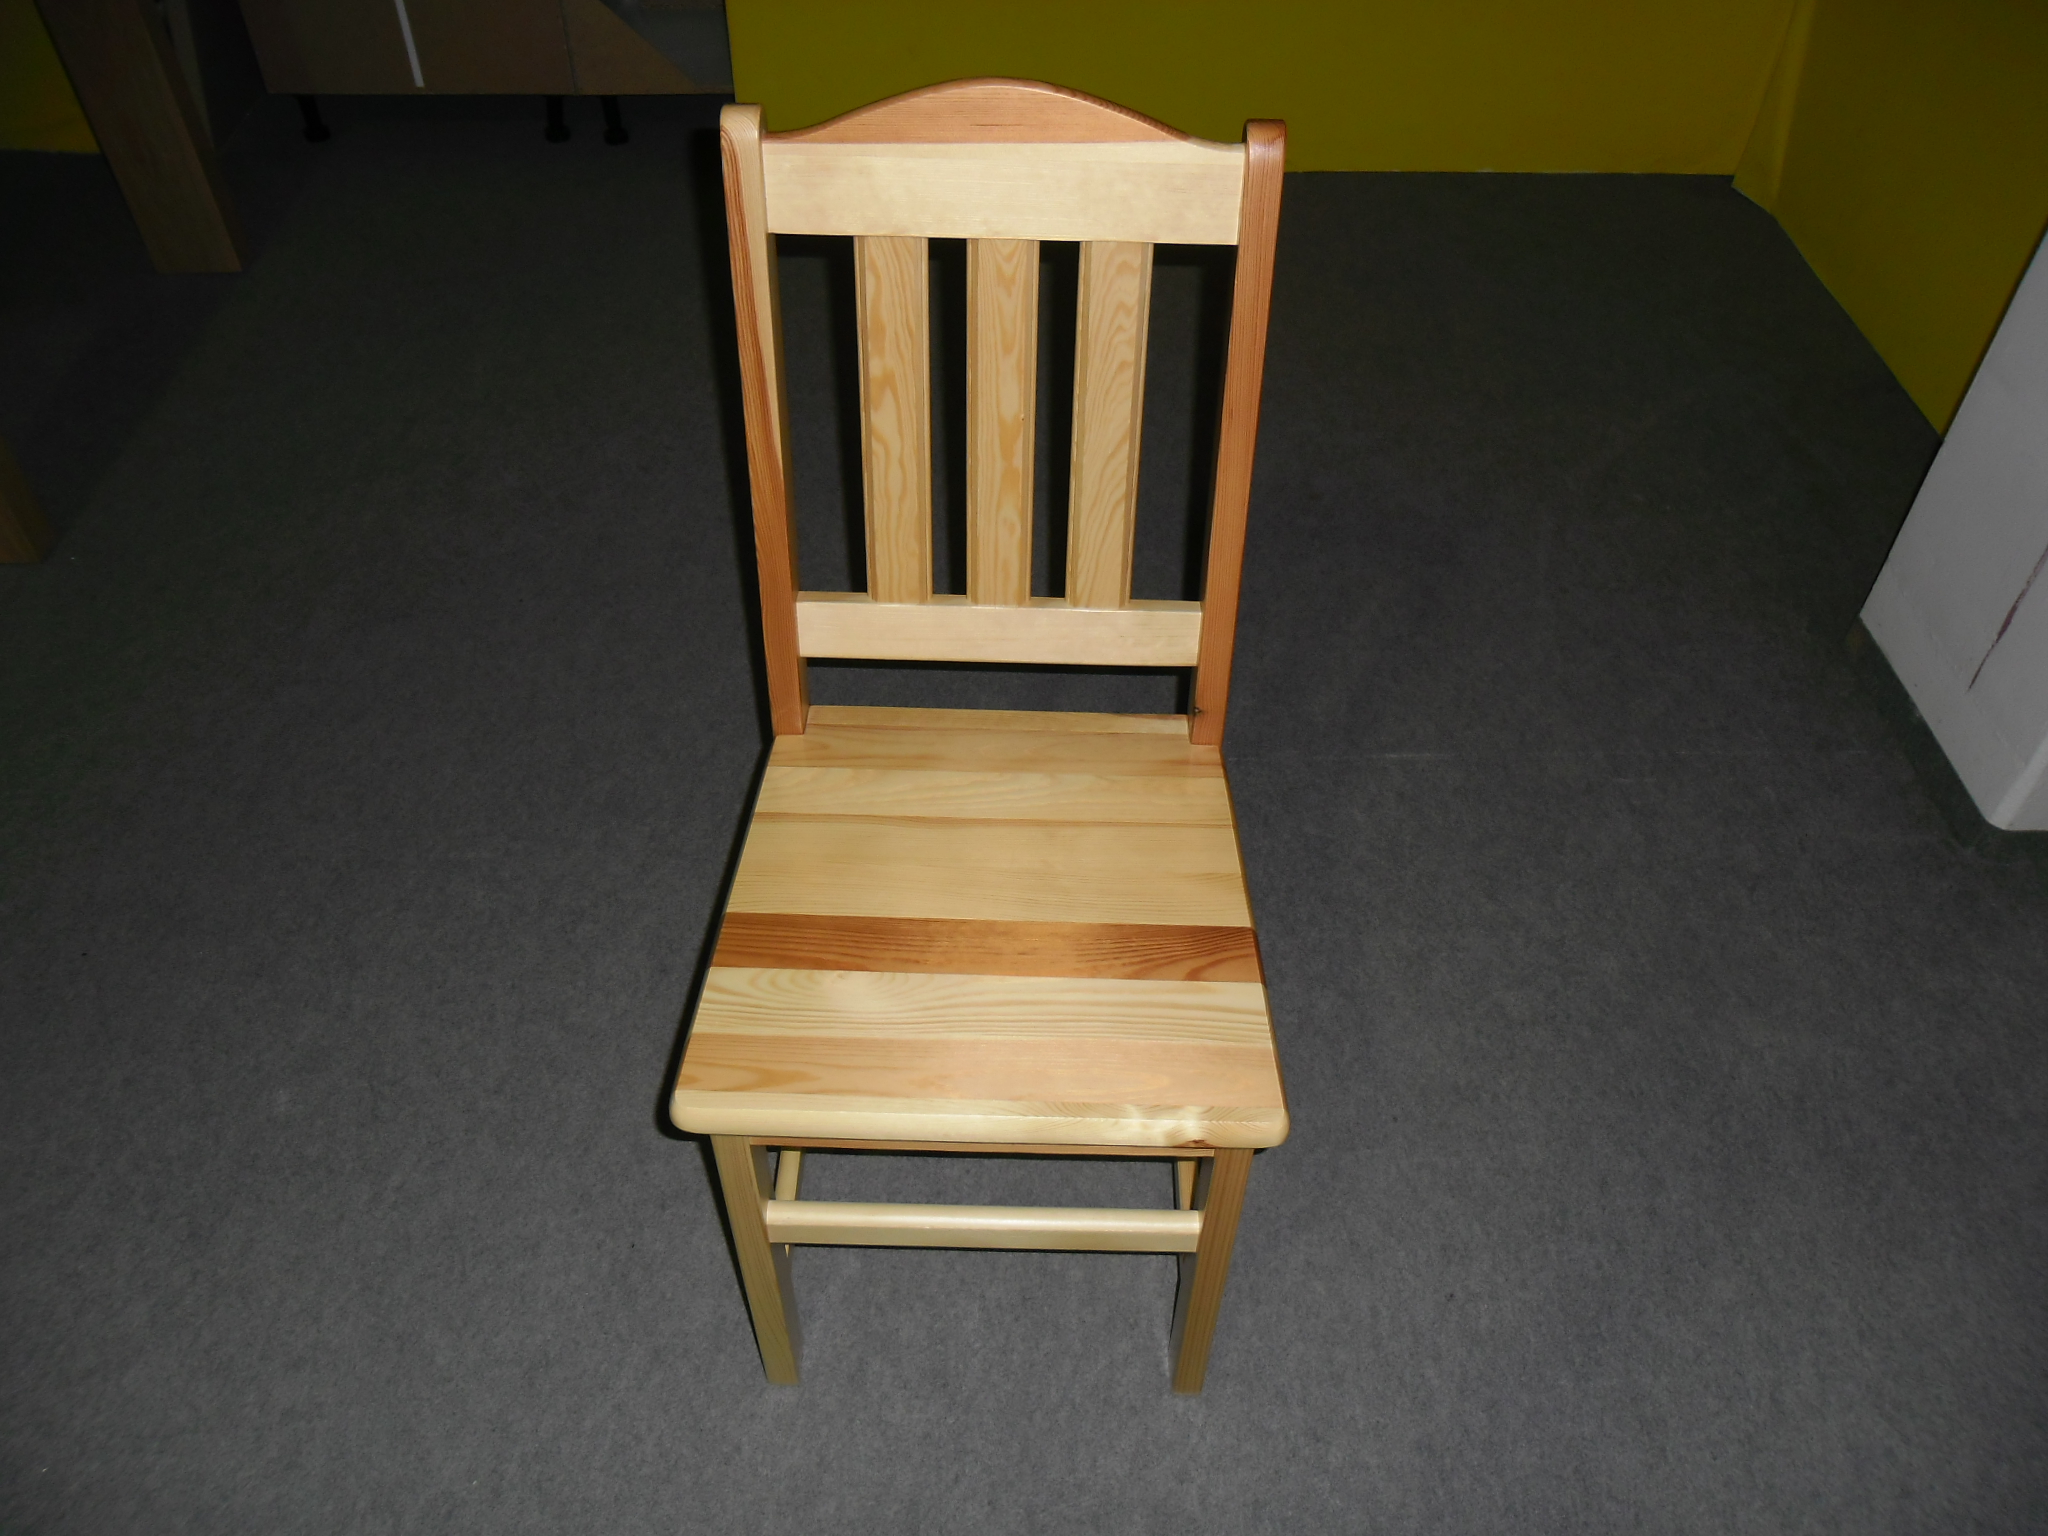 BRADOP kuchyňská židle B161 borovice (SKLADEM 4 KS)